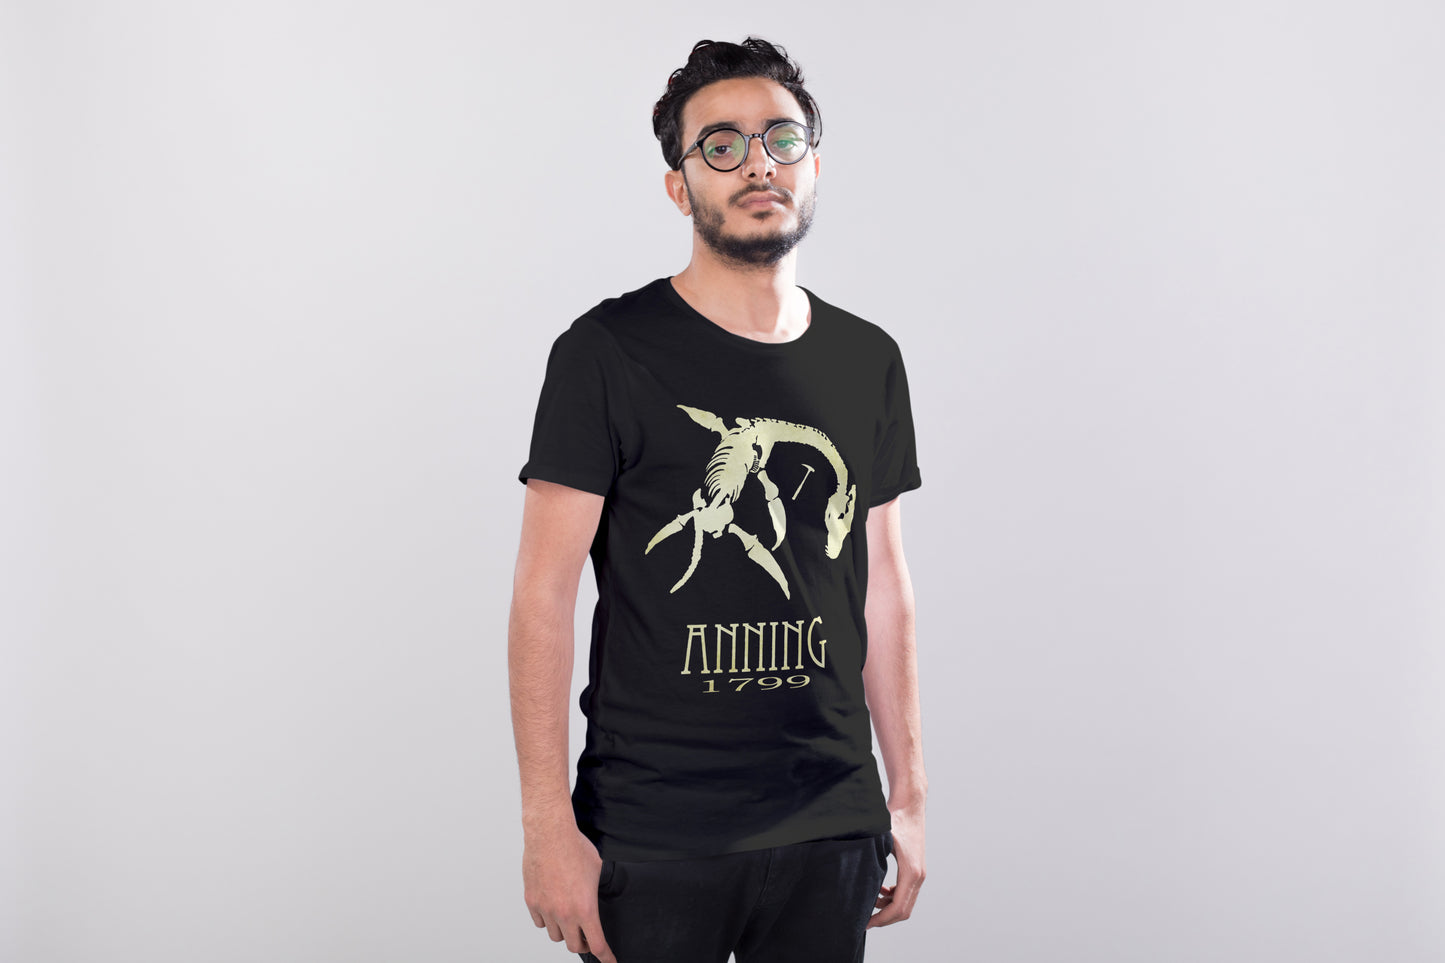 Anning Dinosaur T-shirt, Mary Anning Paleontology Science Shirt